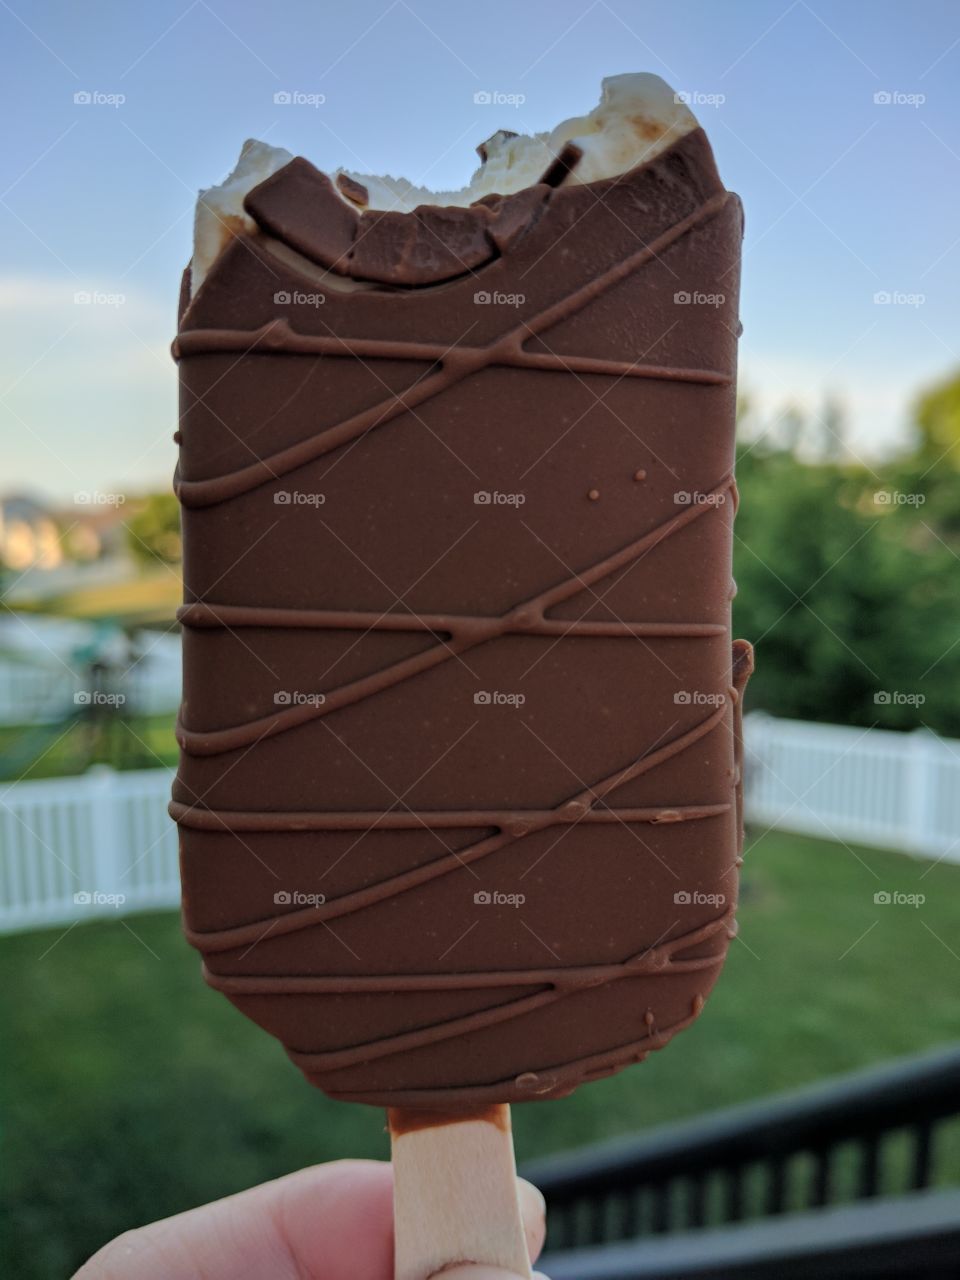 Tasty chocolate-covered ice cream bar